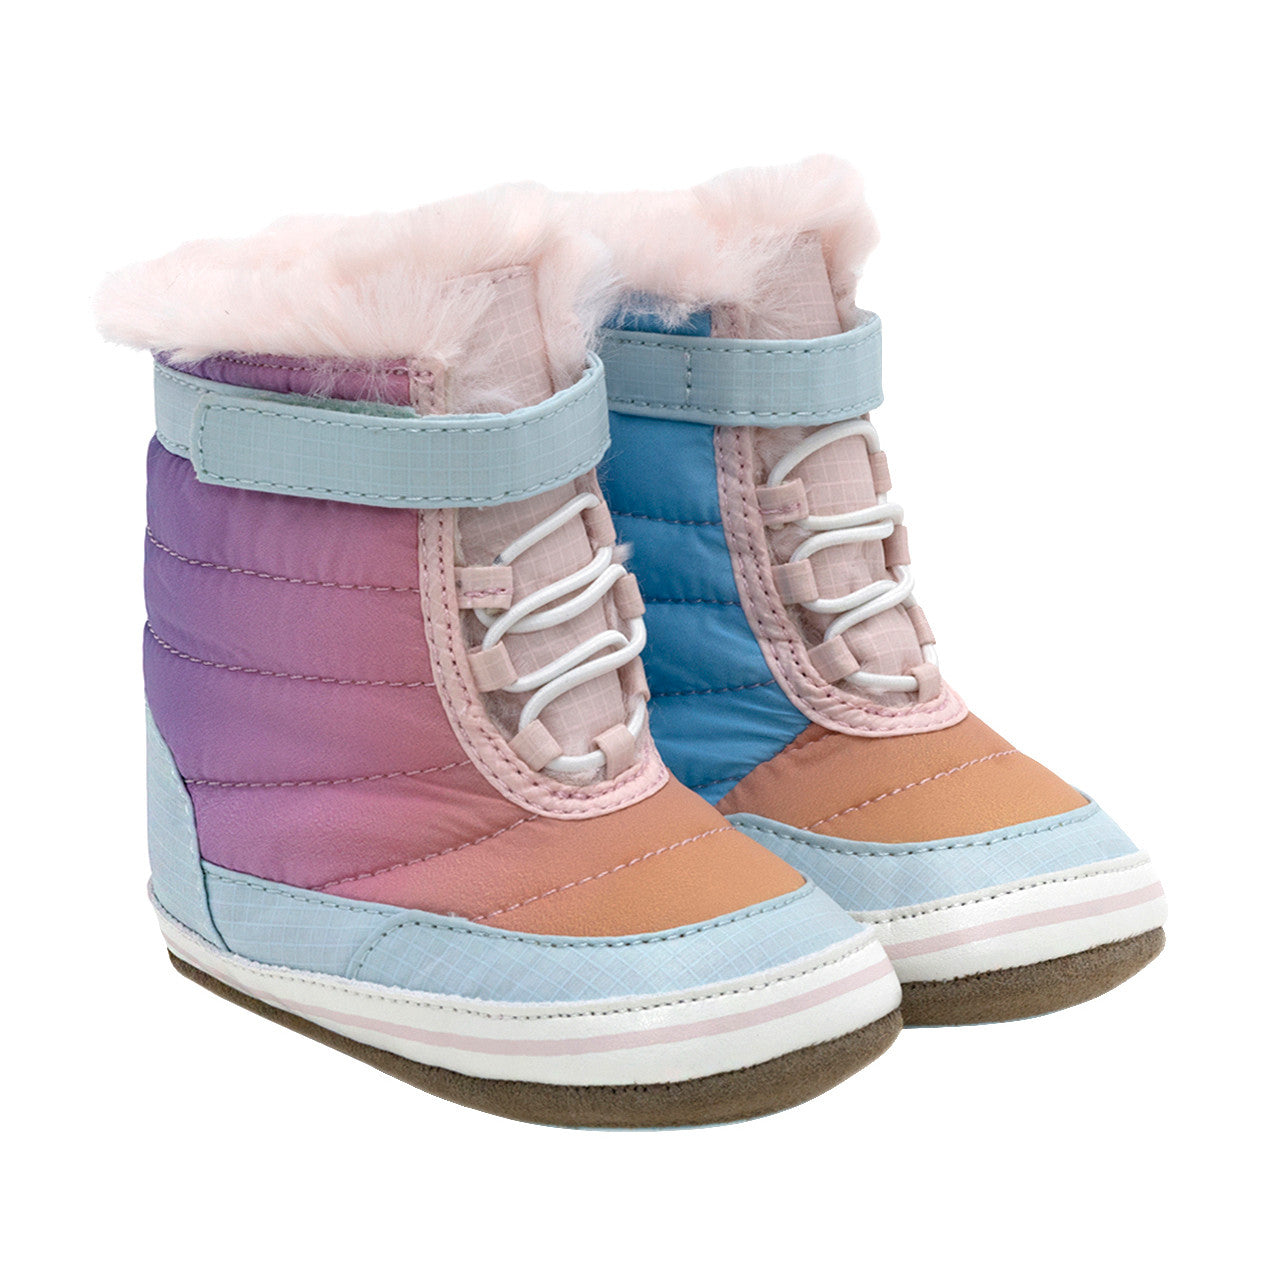 Sun Valley Boots - Rainbow Gradient Girls Shoes Robeez   